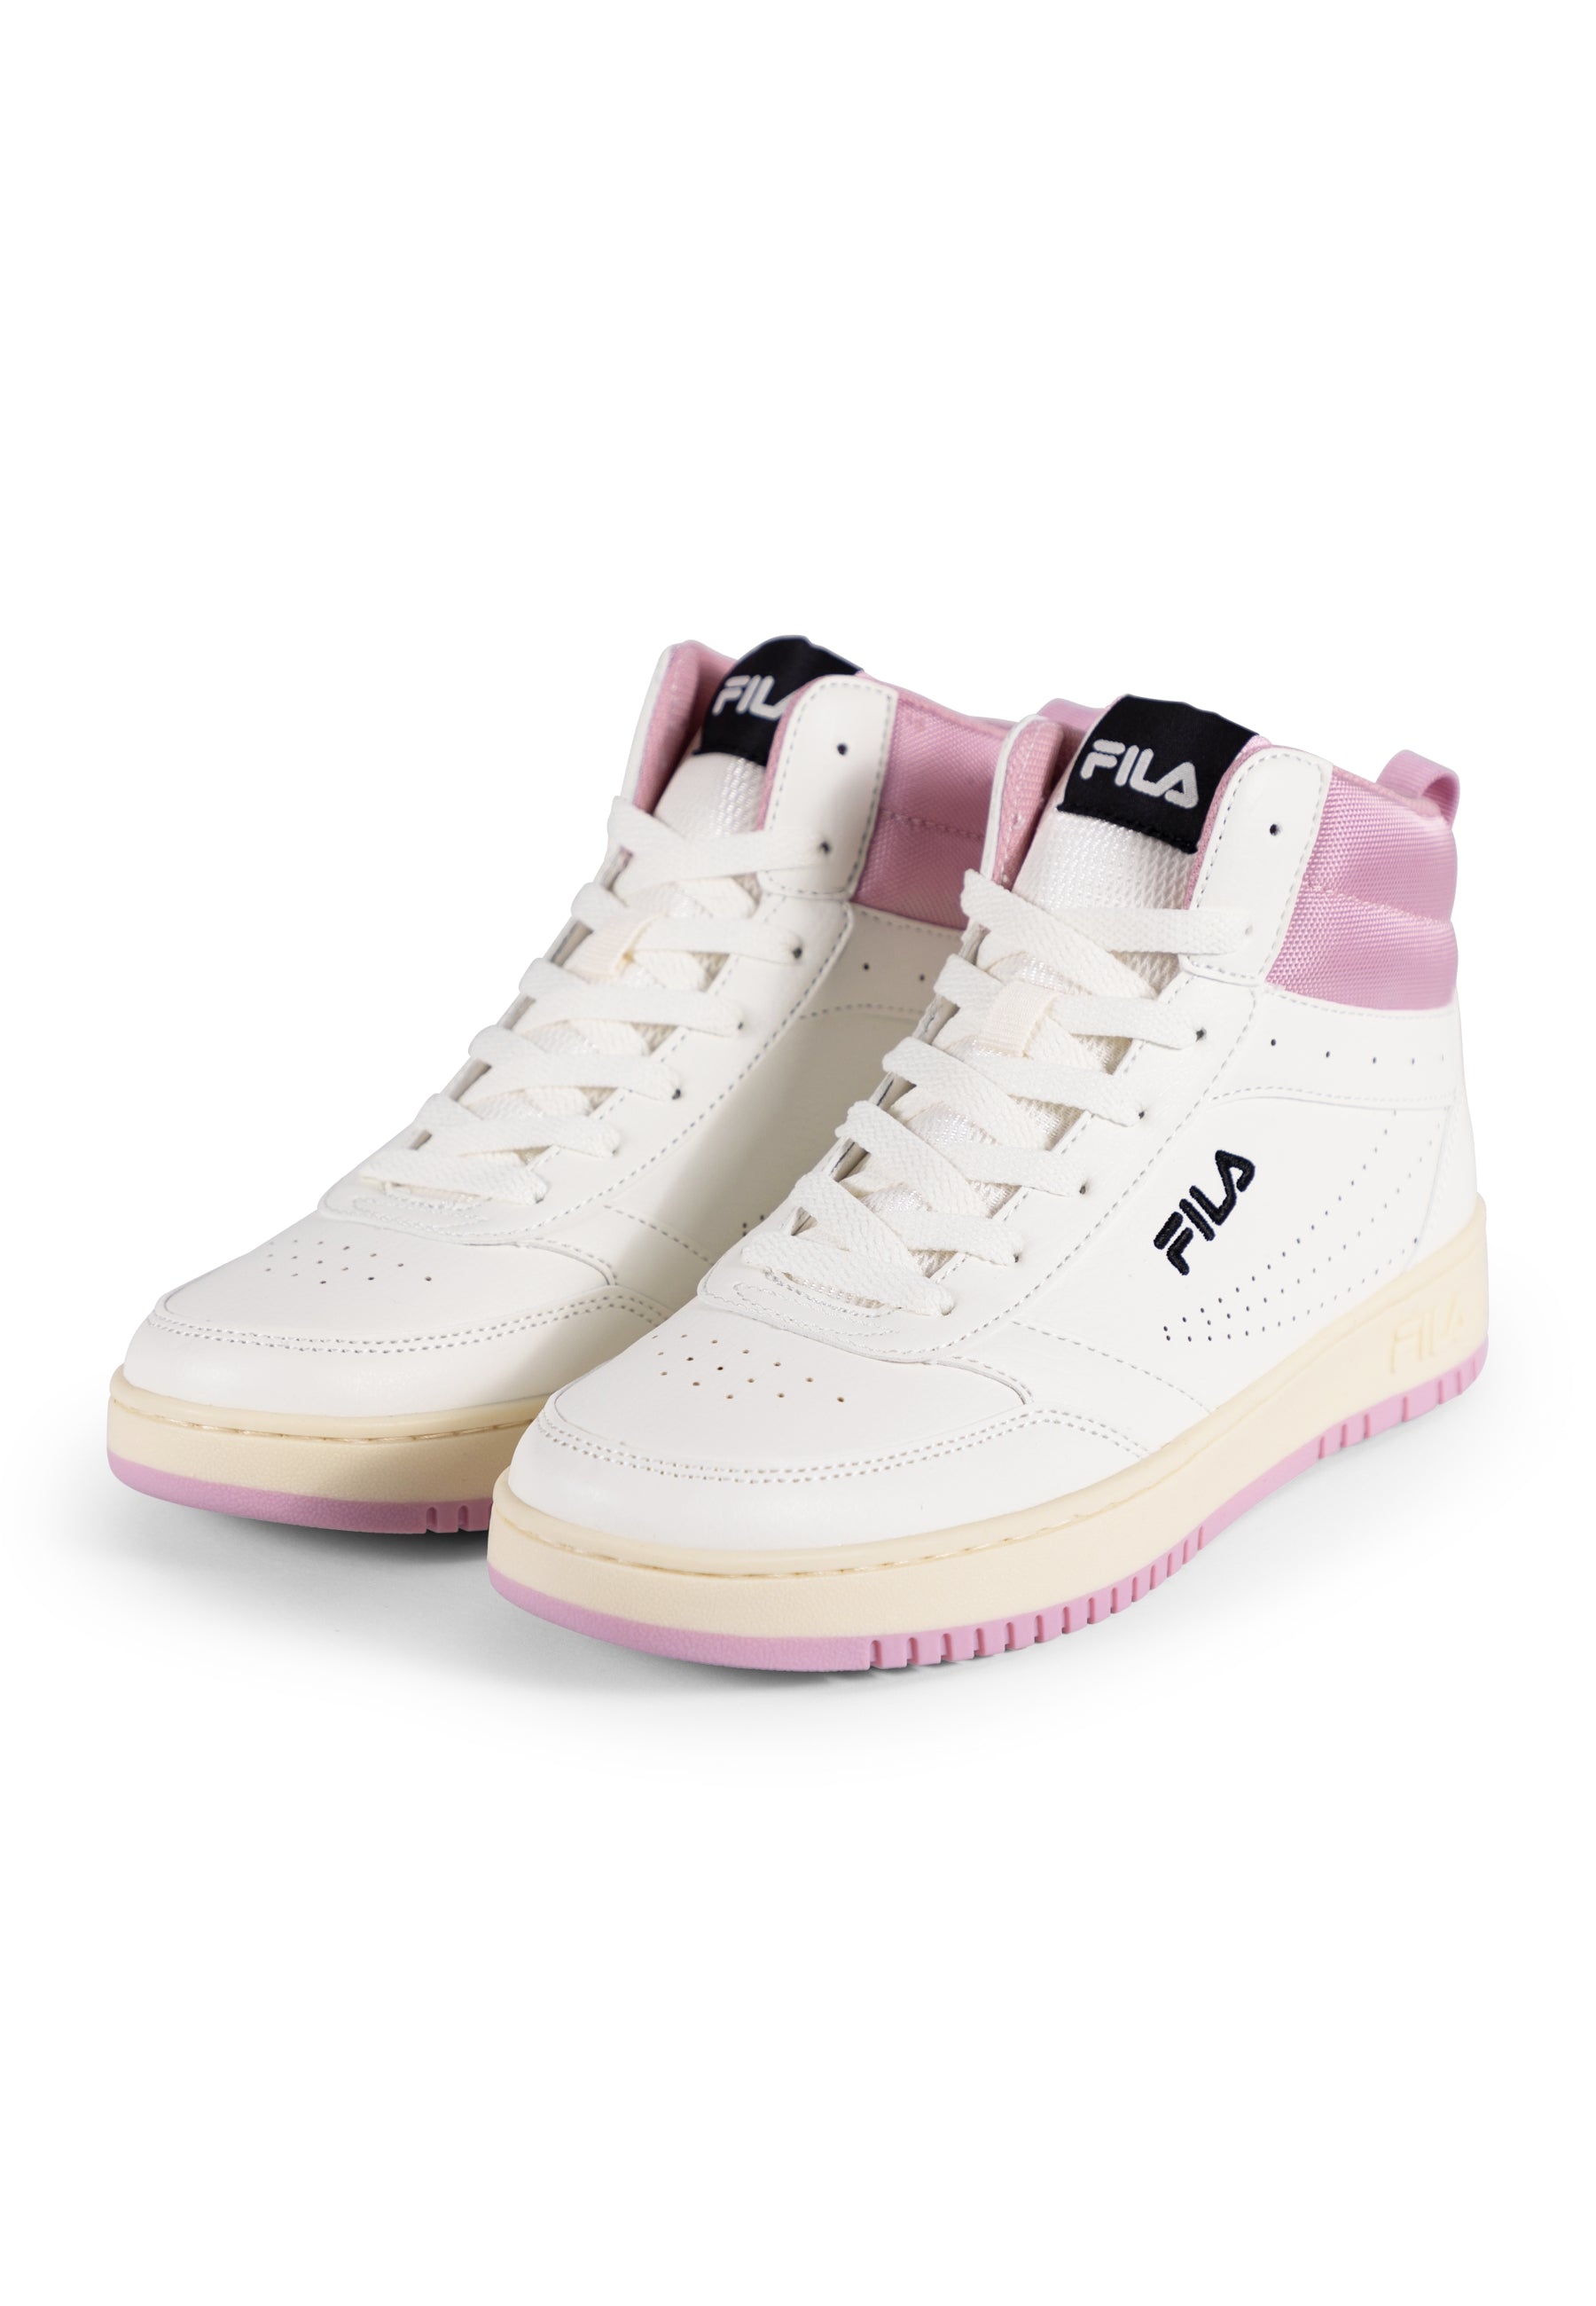 Rega Mid Wmn in Marshmallow-Pink Nectar Sneakers Fila   